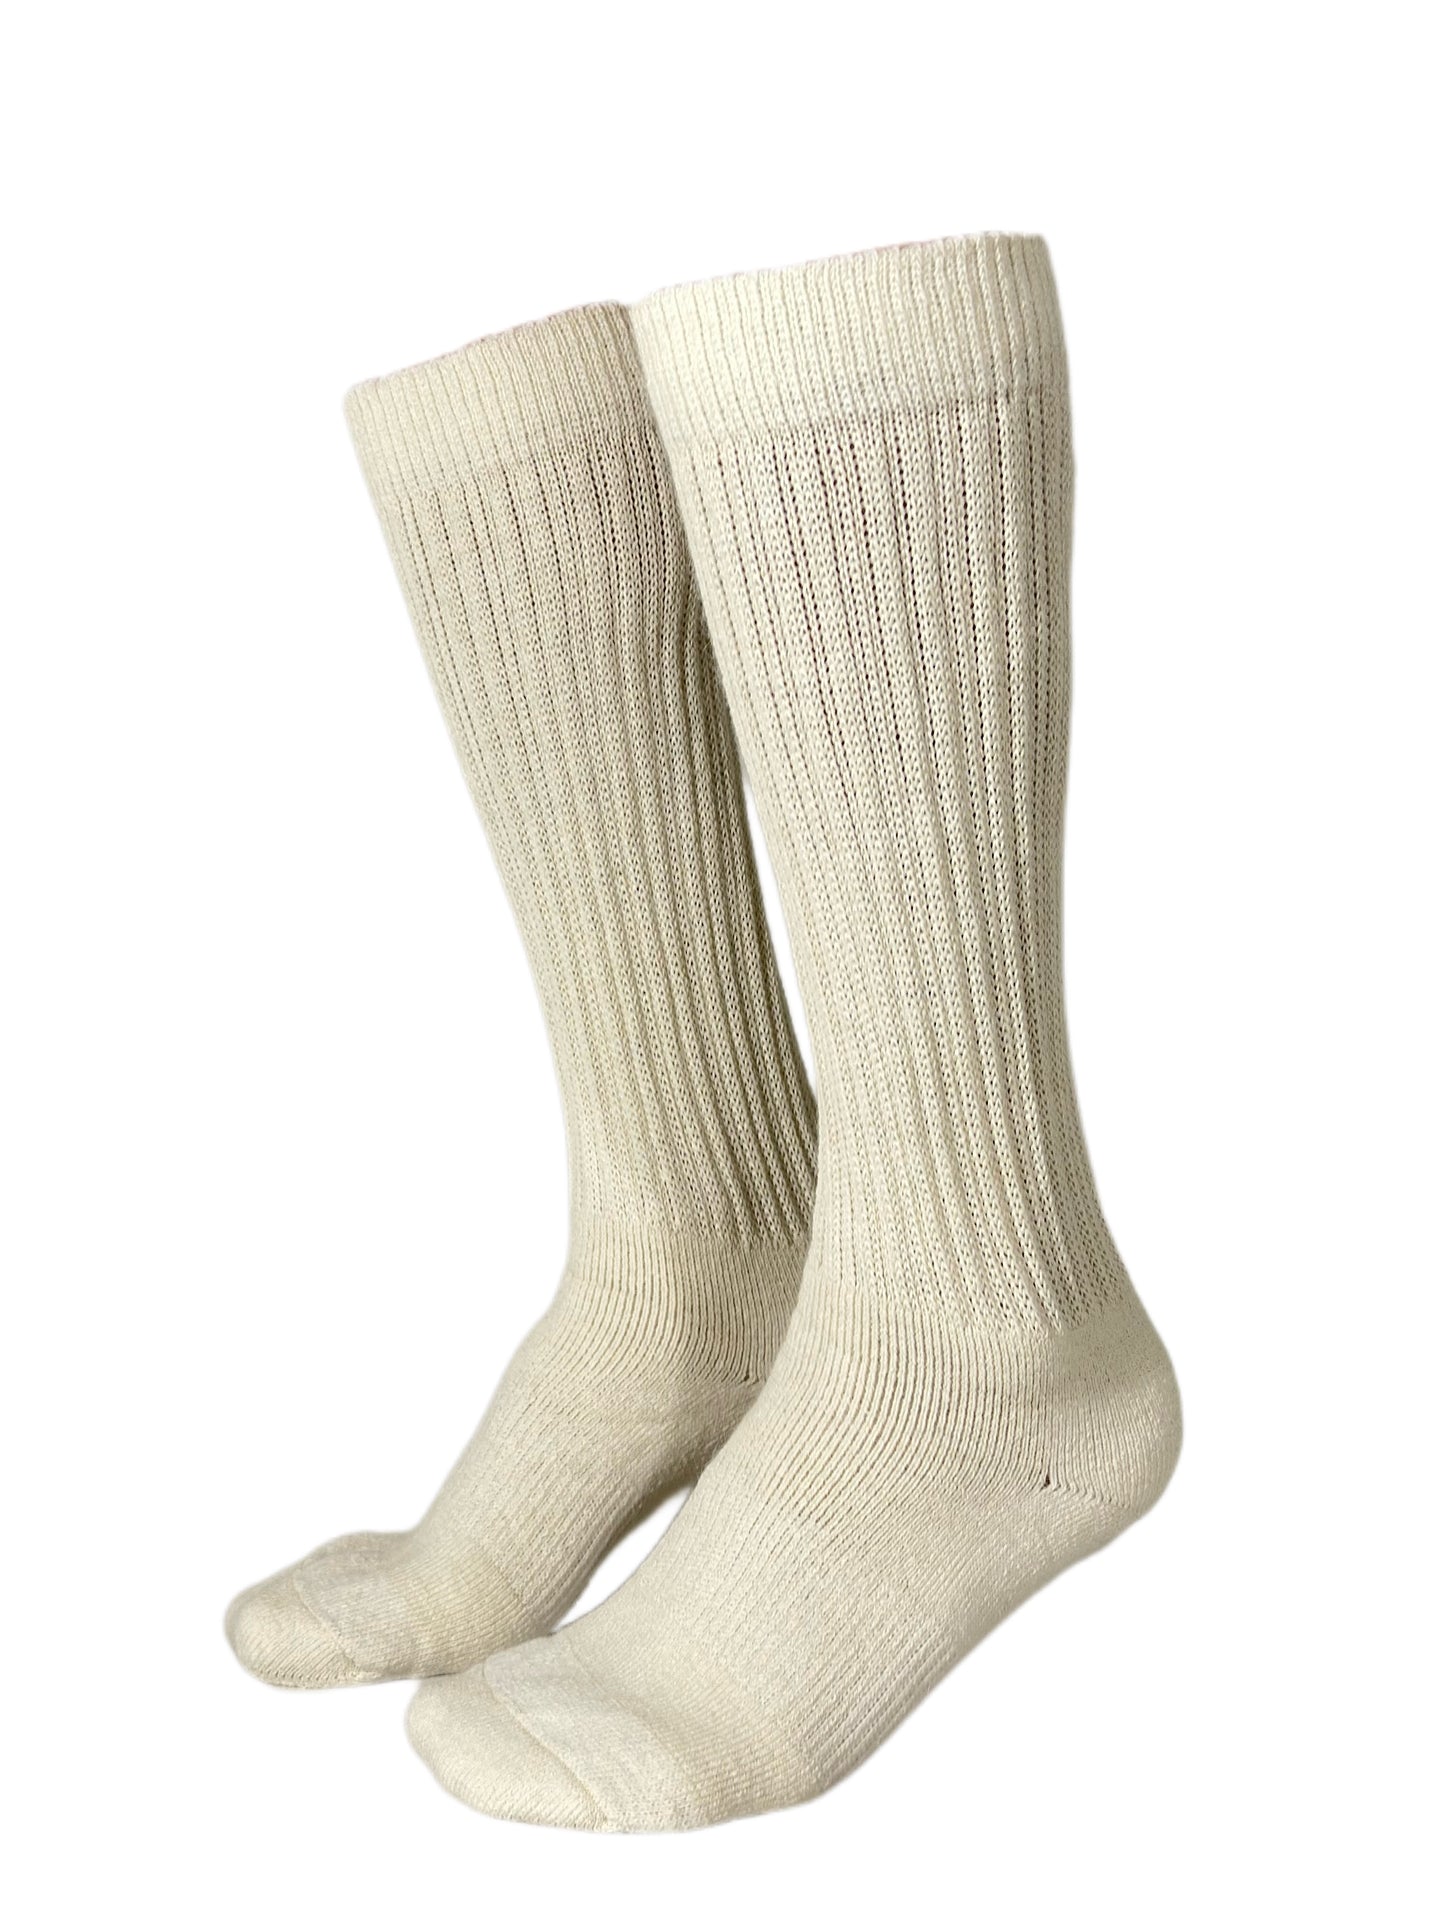 The knee sock